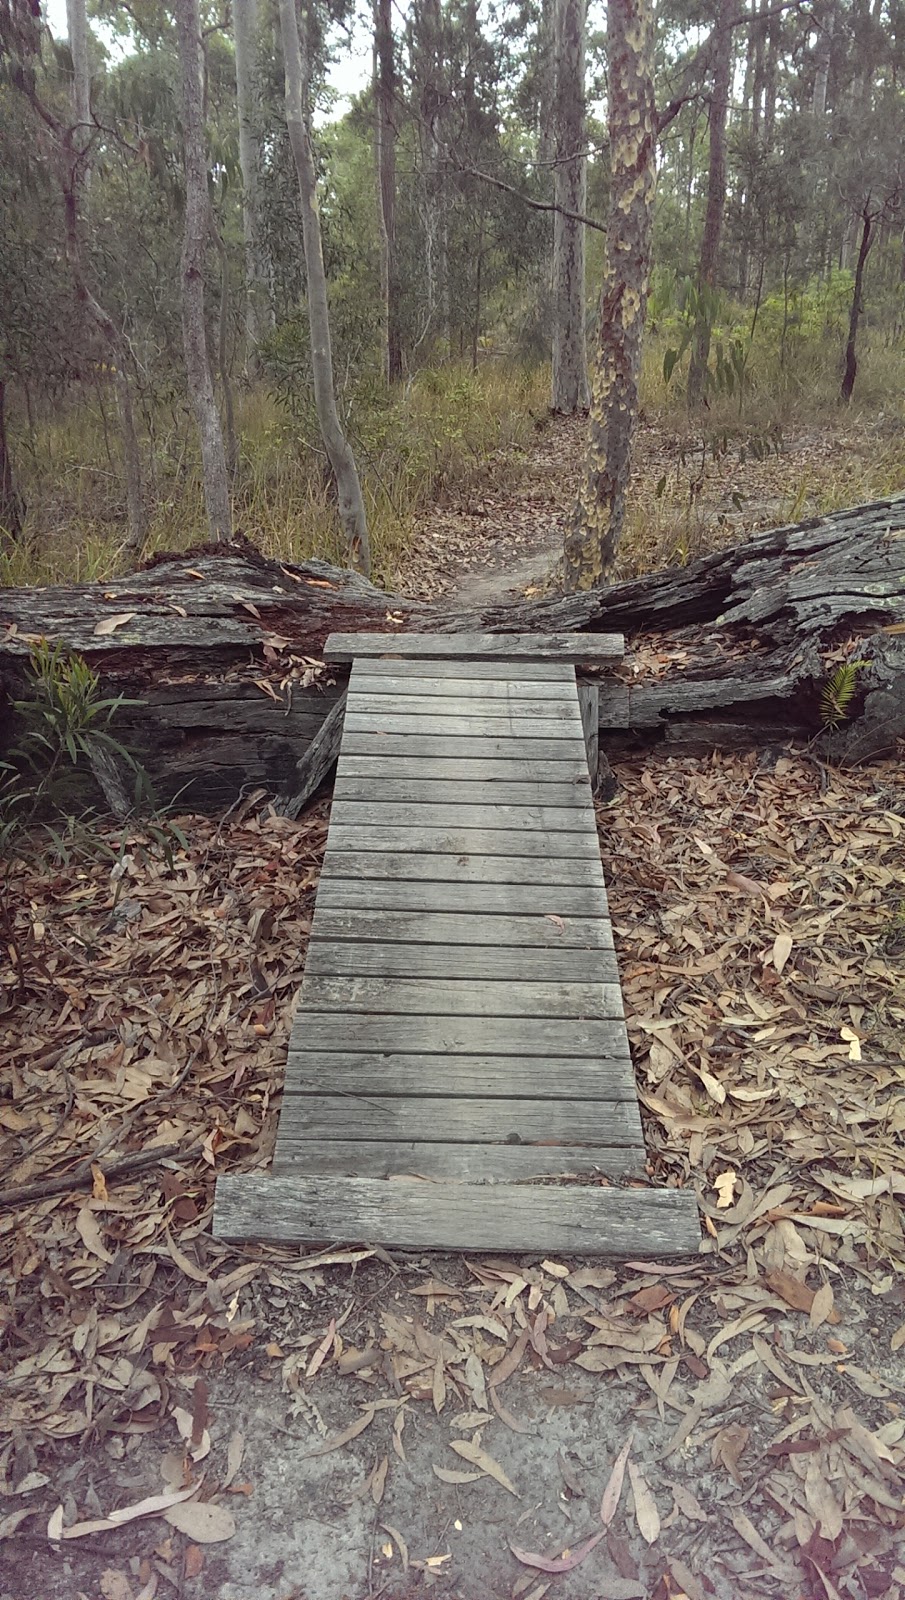 Bermagui Mountain Bike Park | Scenic Forest Dr, Bermagui NSW 2546, Australia